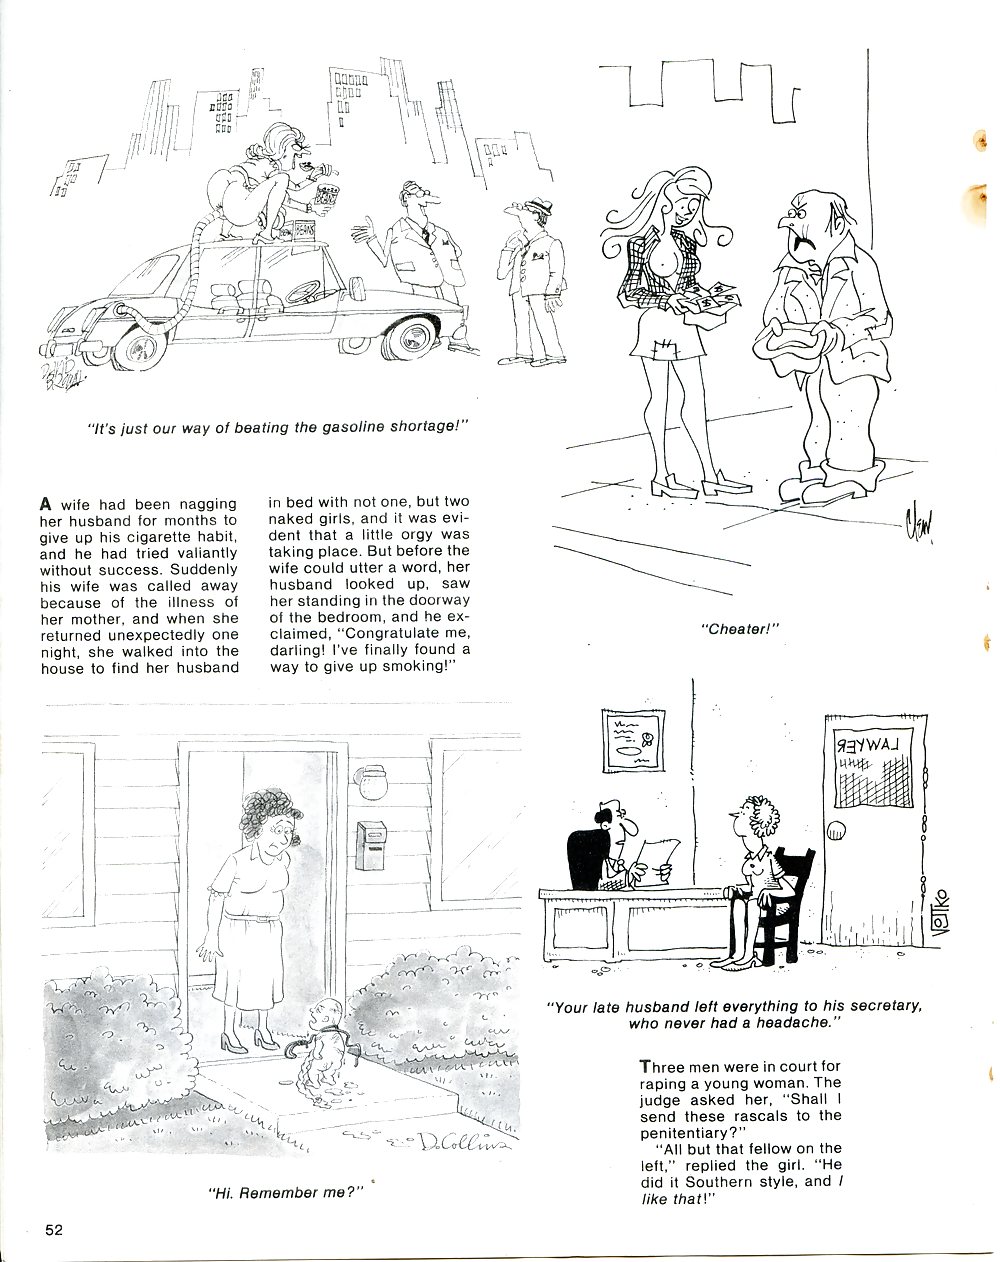 Revistas vintage hustler humor - 1979
 #1445749